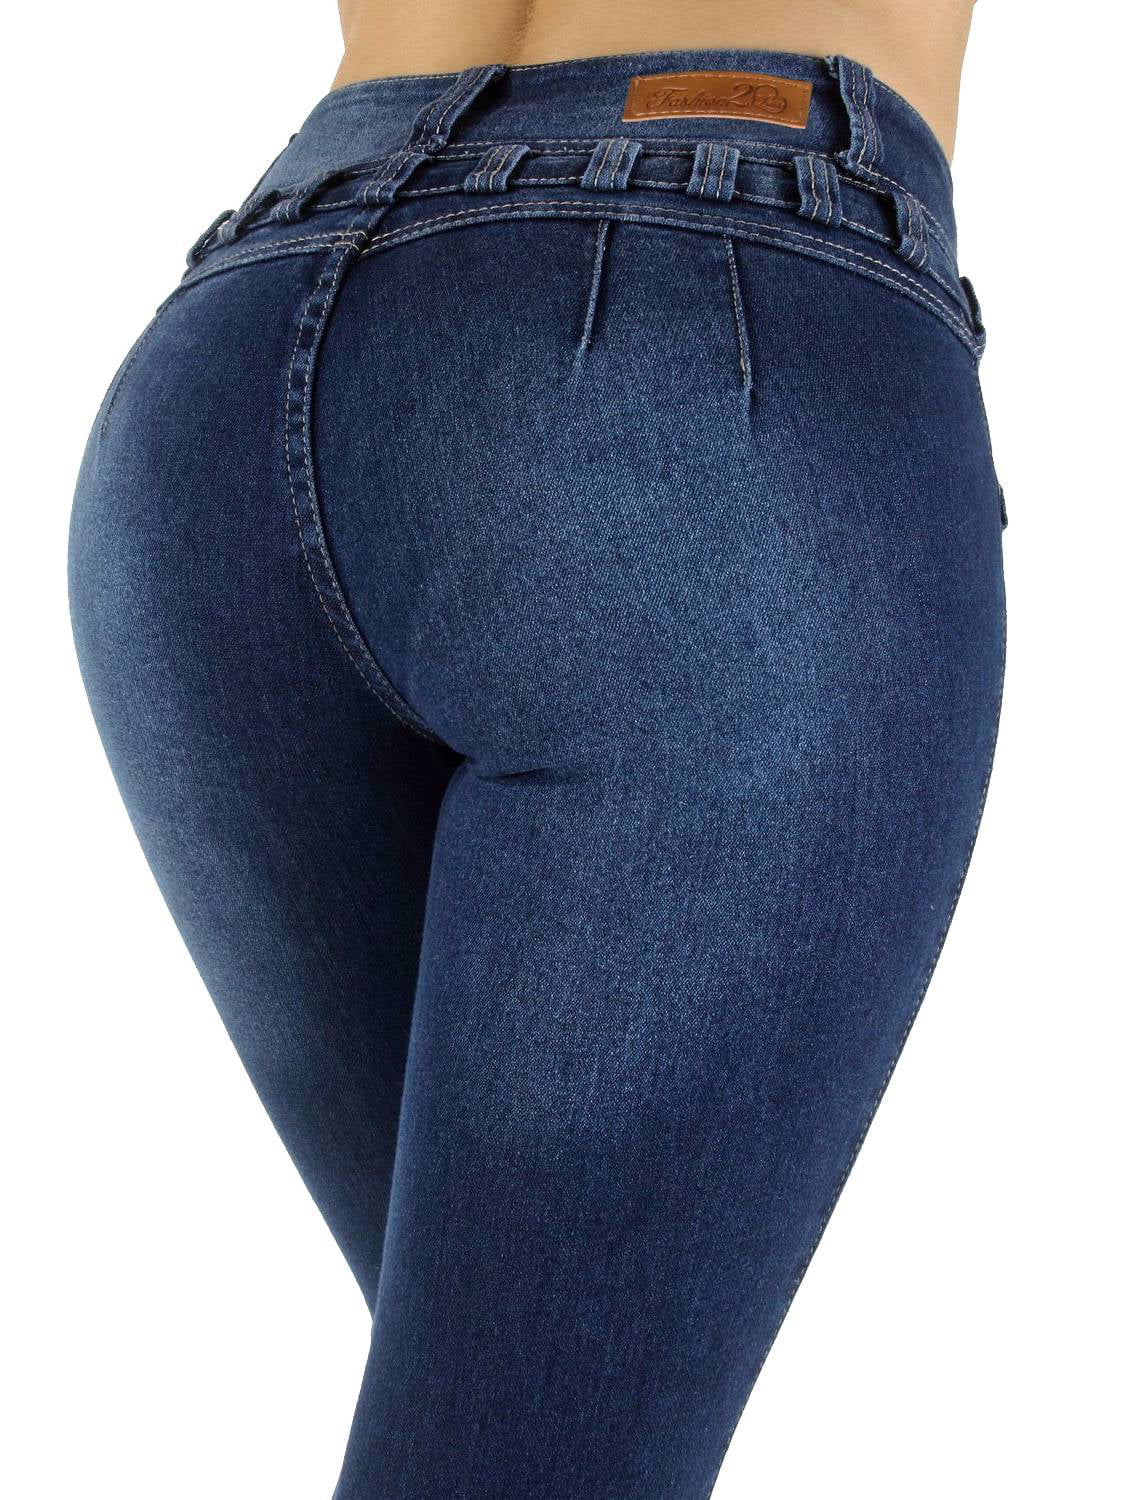 bum enhancing jeans